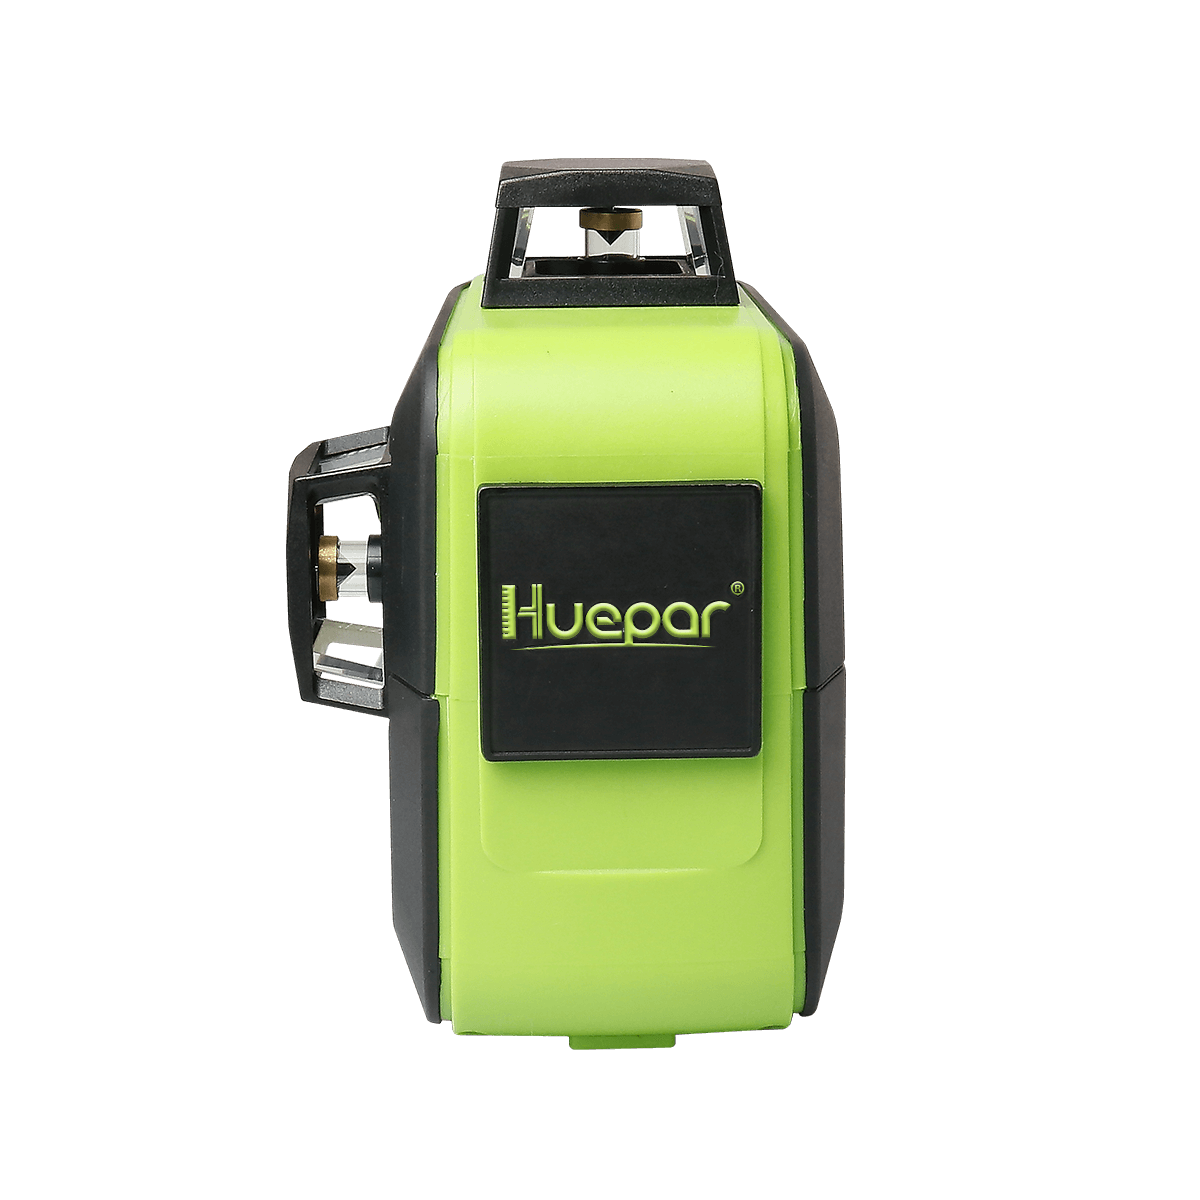 HUEPAR 602CG HUEPAR EU - Laser Level